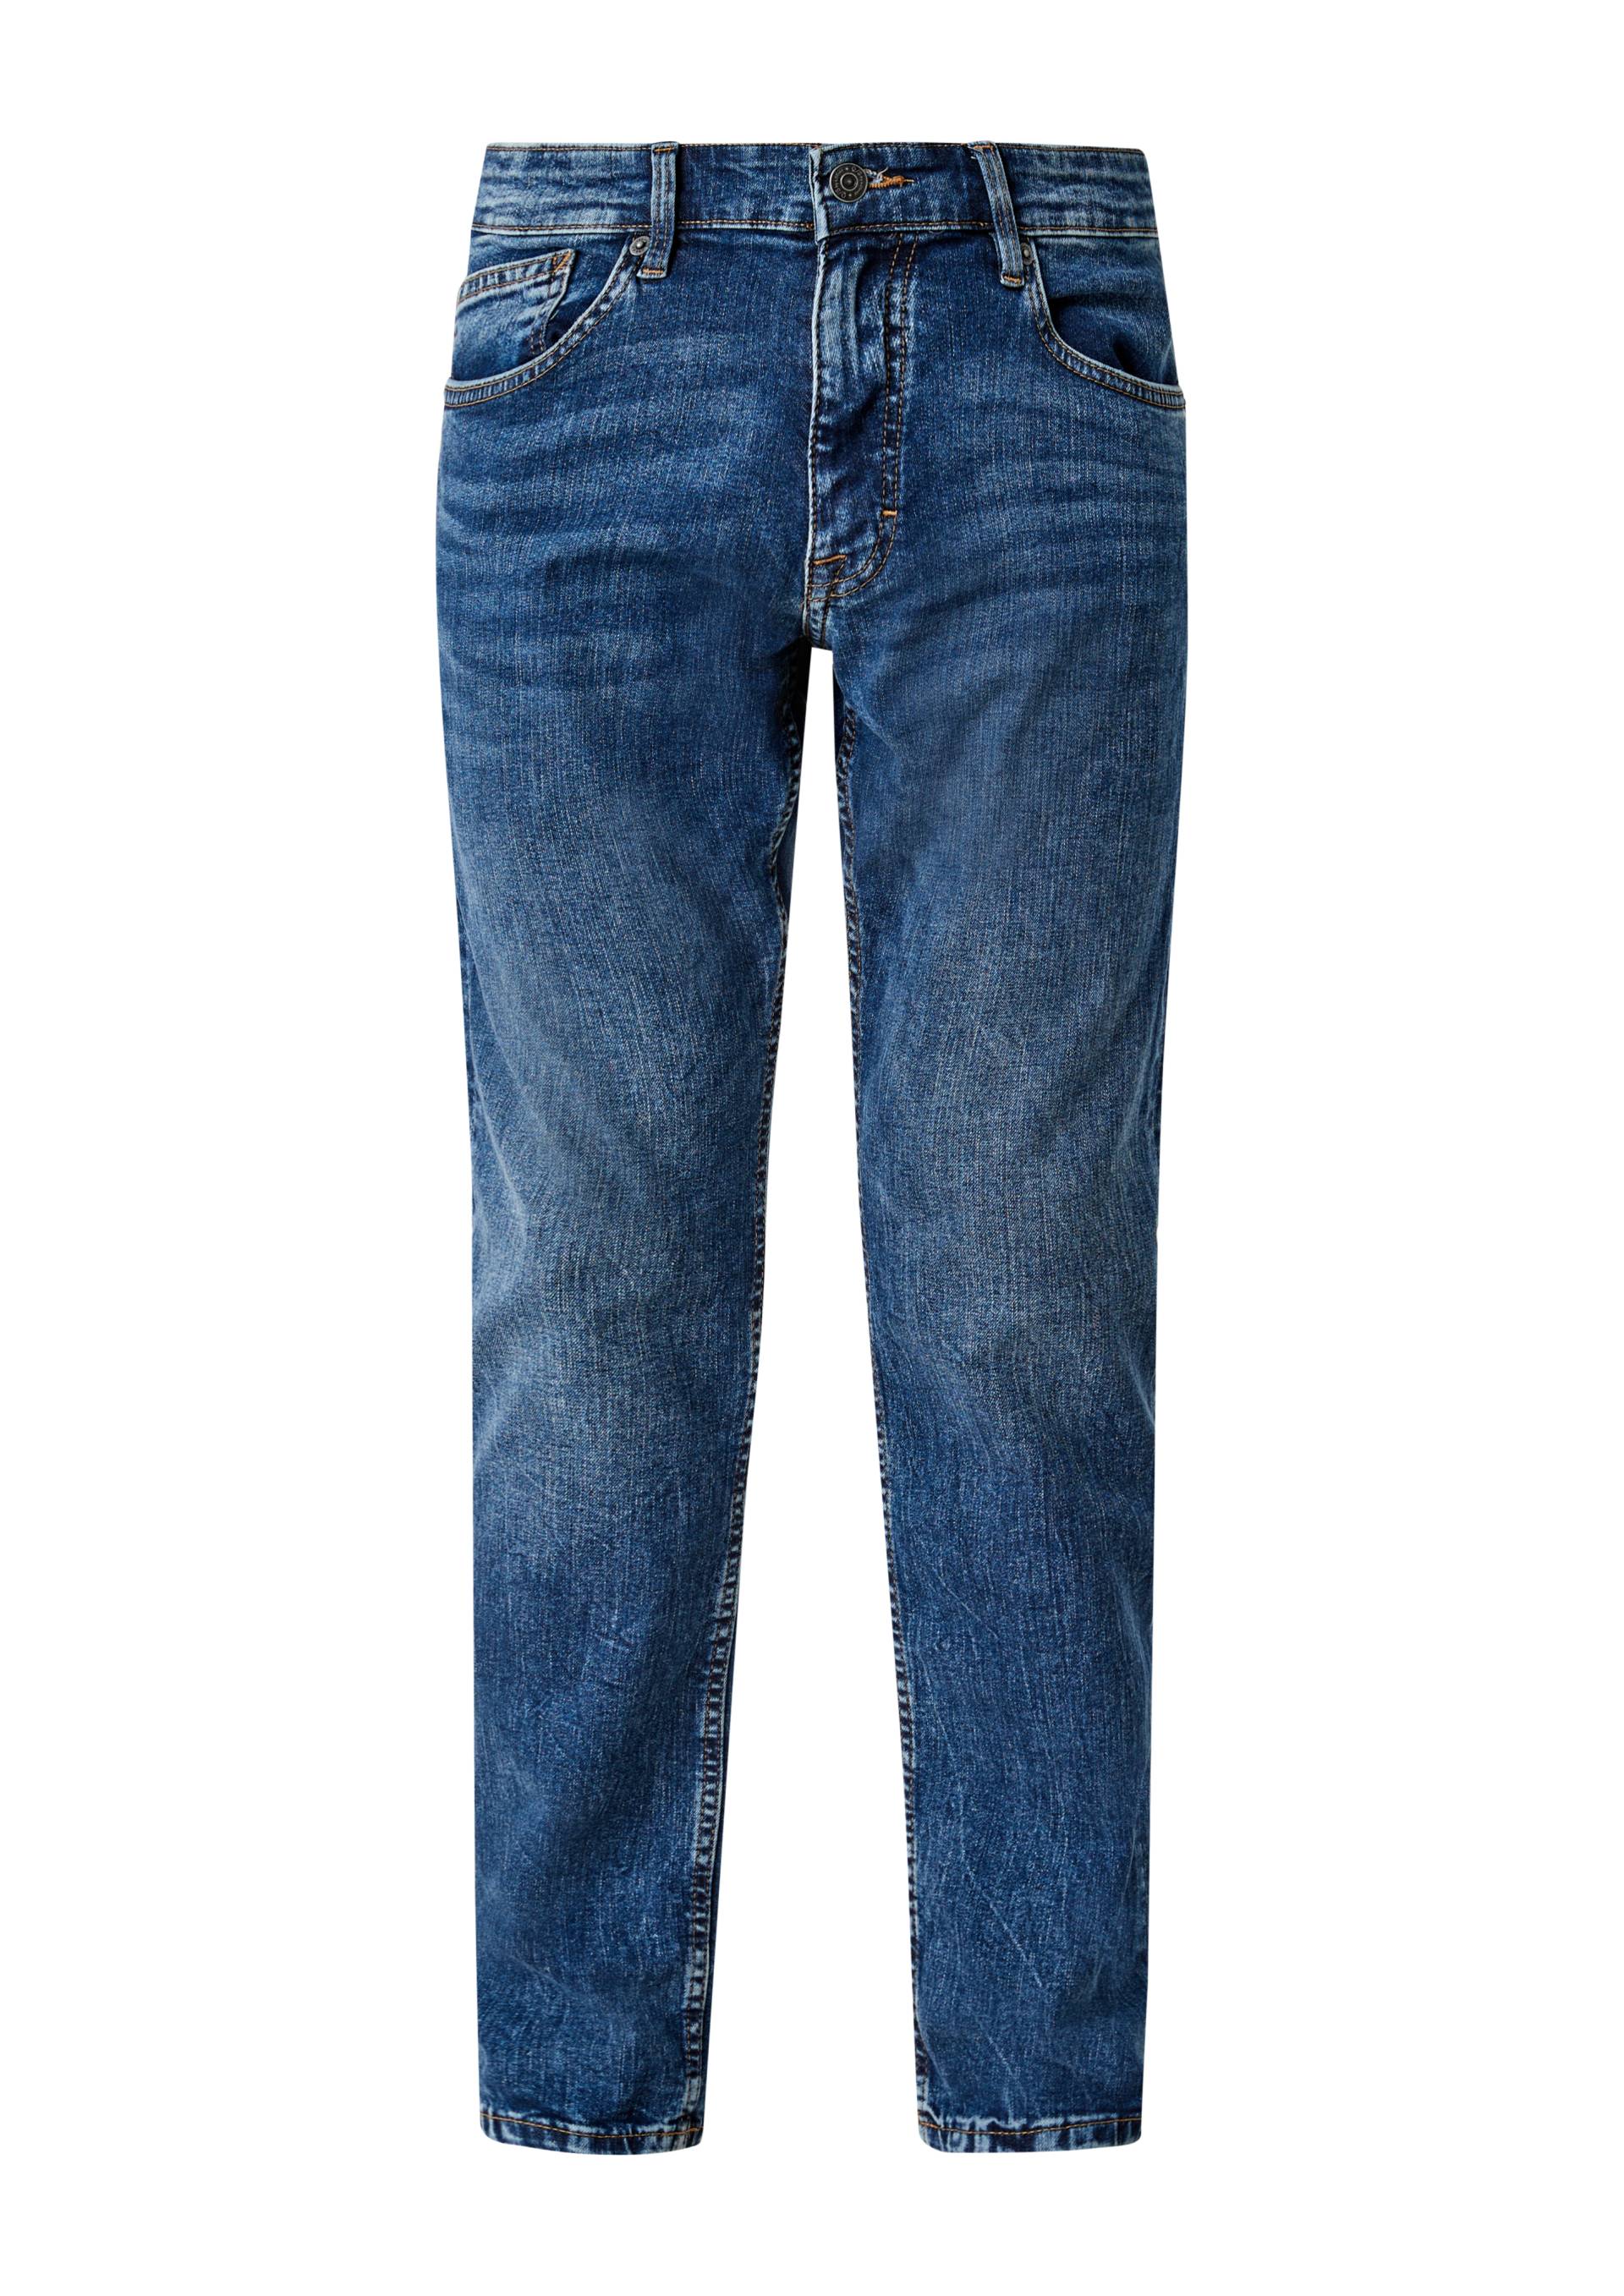 QS - Jeans Rick / Slim Fit / Mid Rise / Slim Leg, Herren, blau von QS